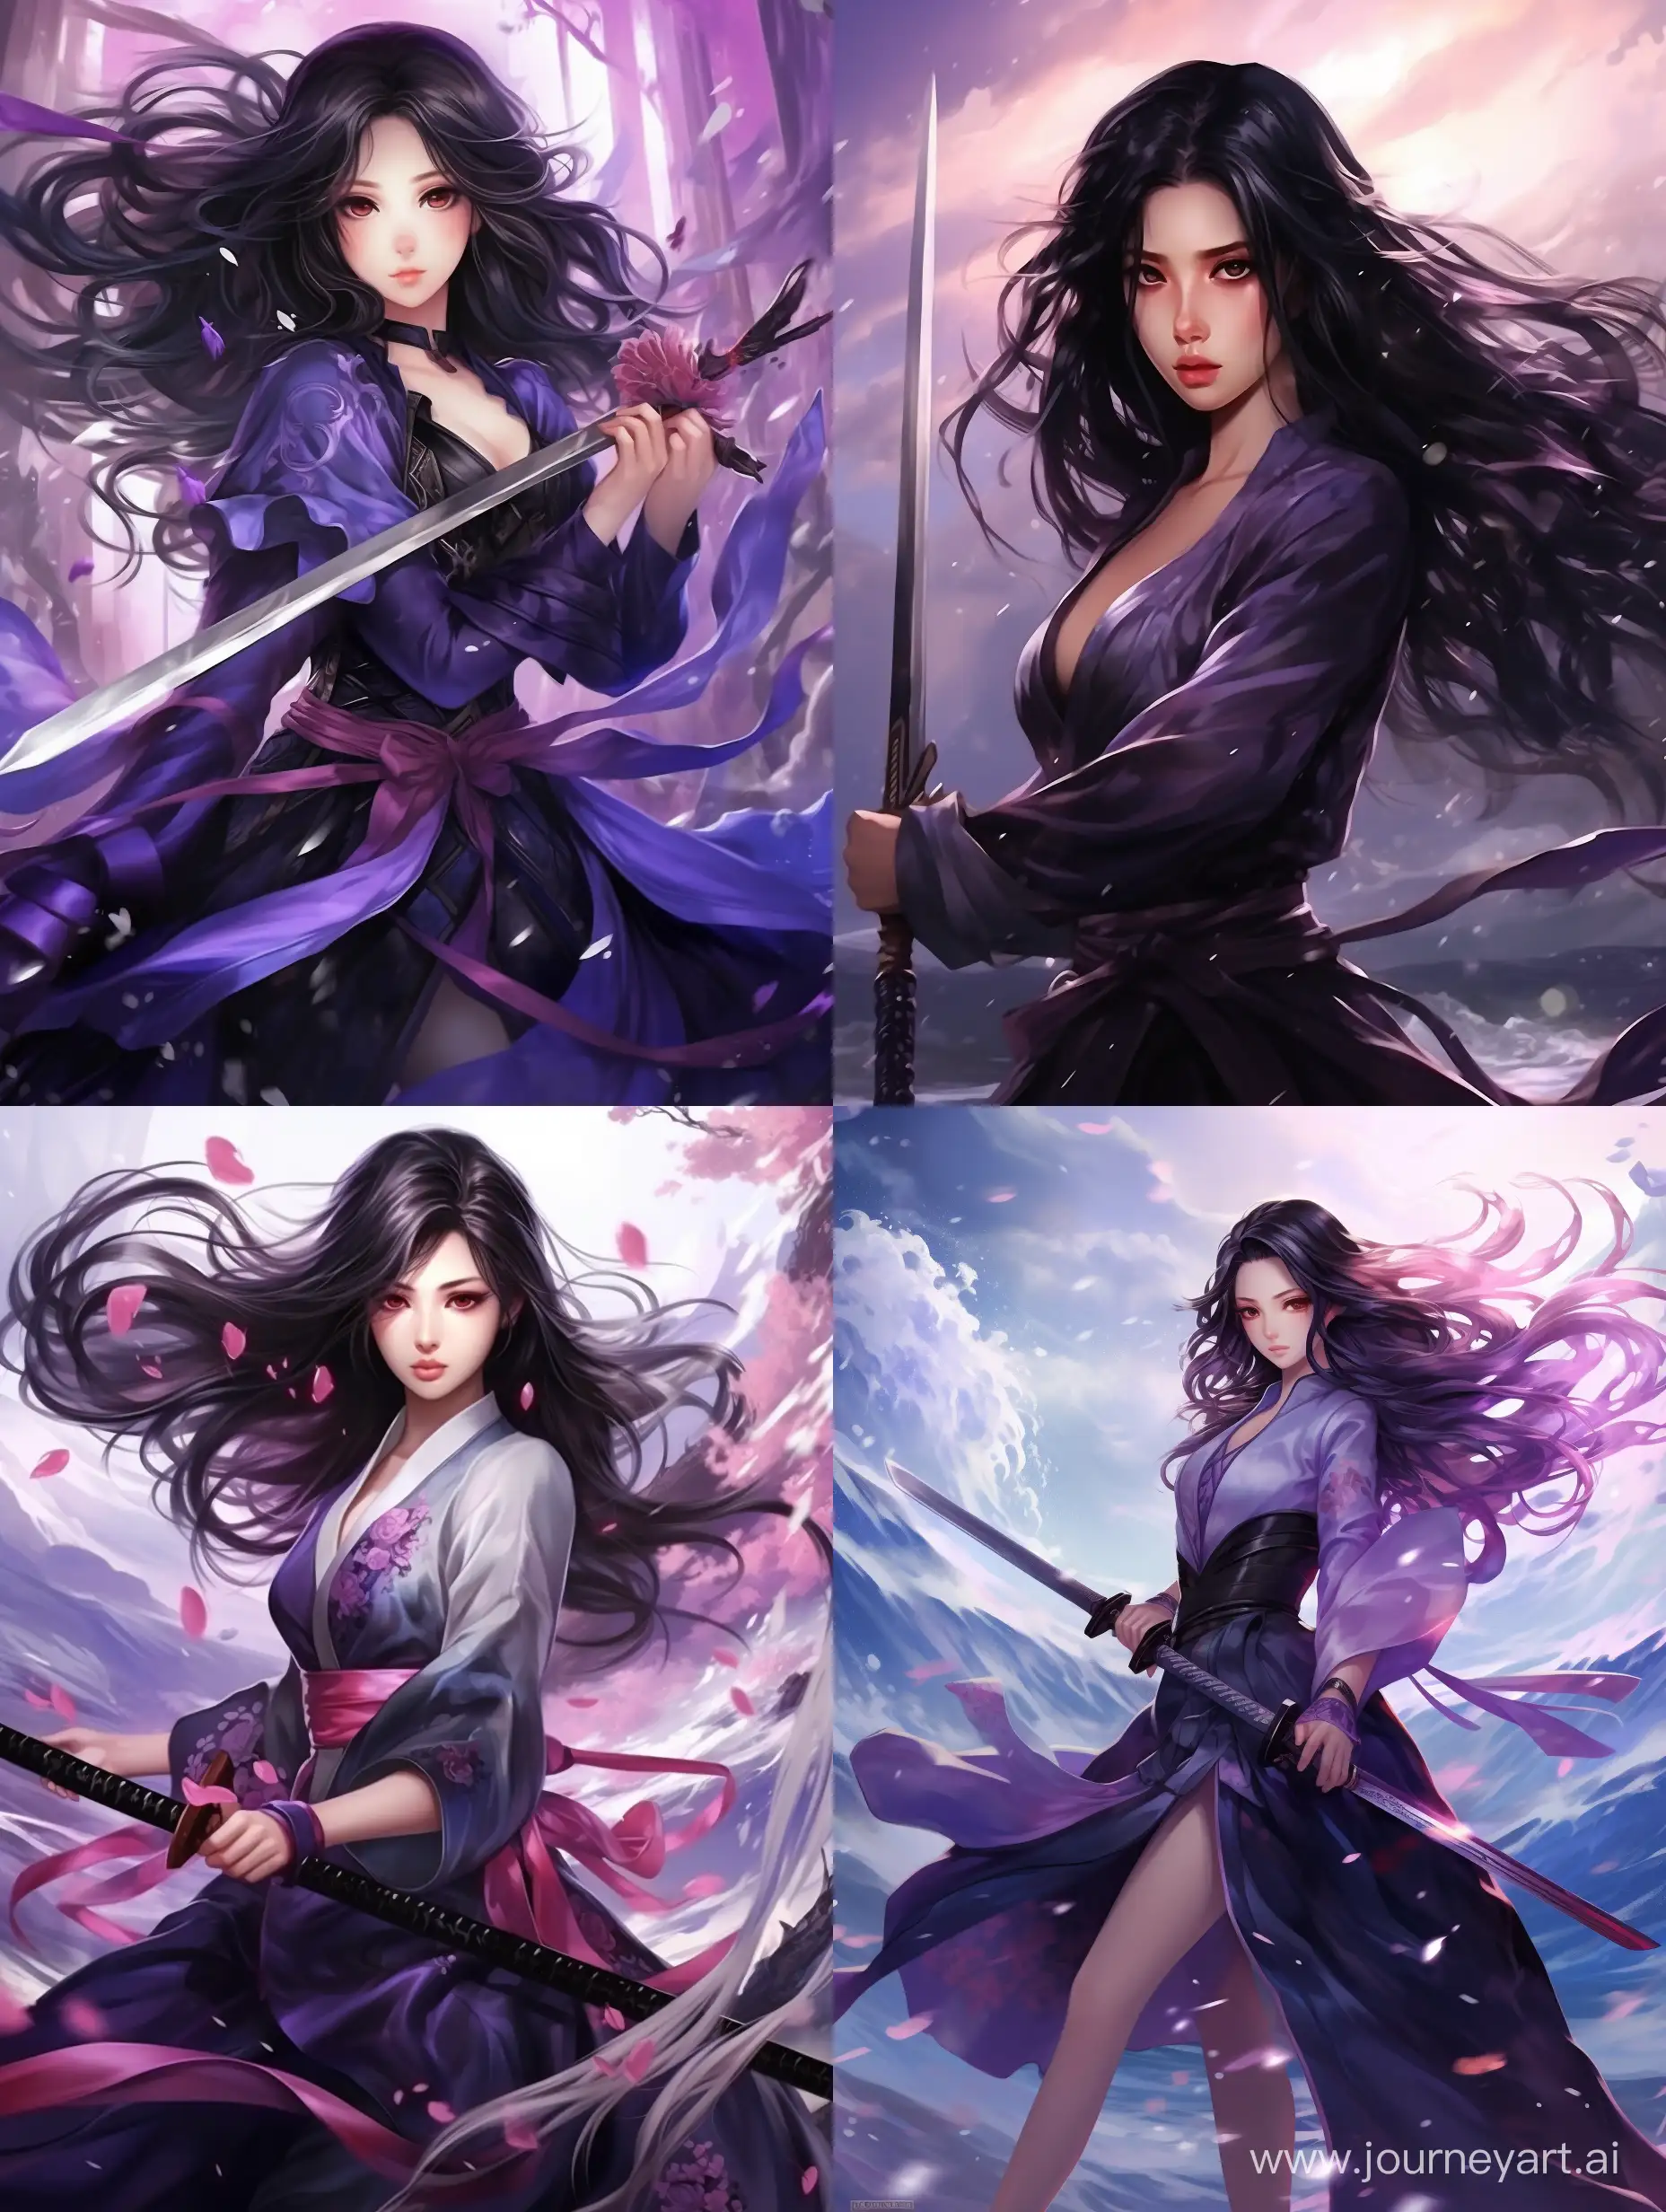 Dynamic-Manga-Style-Art-of-a-Beautiful-Girl-in-Purple-Kimono-with-Katana